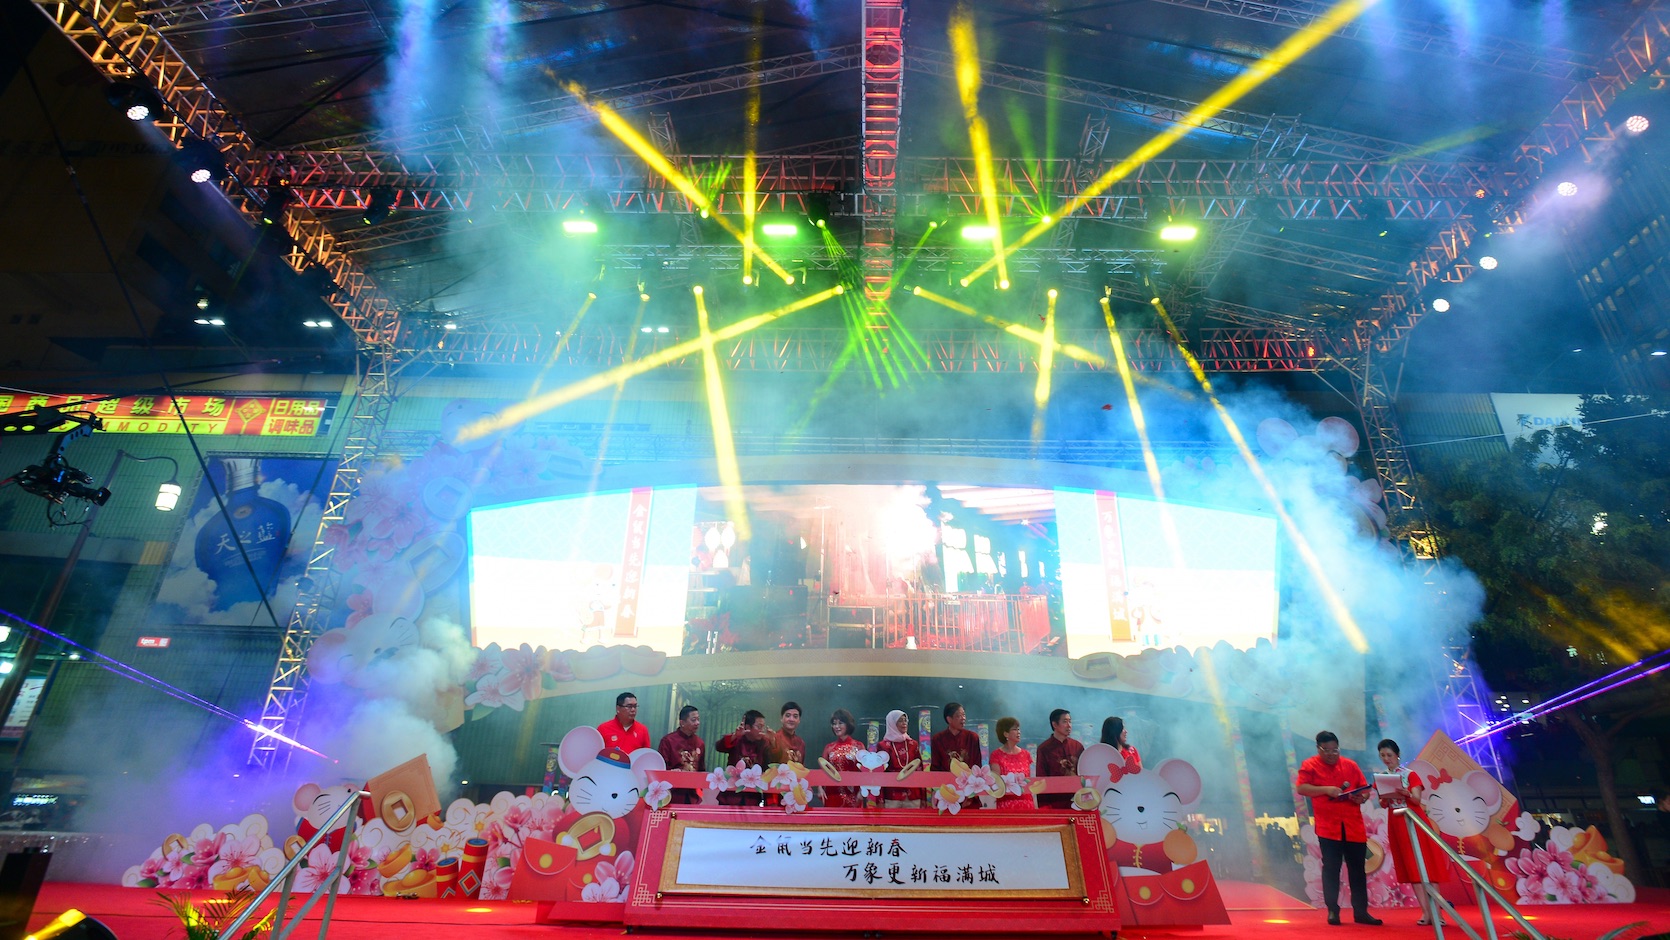 A Dream Come True: Celebrating the Lunar New Year in Singapore